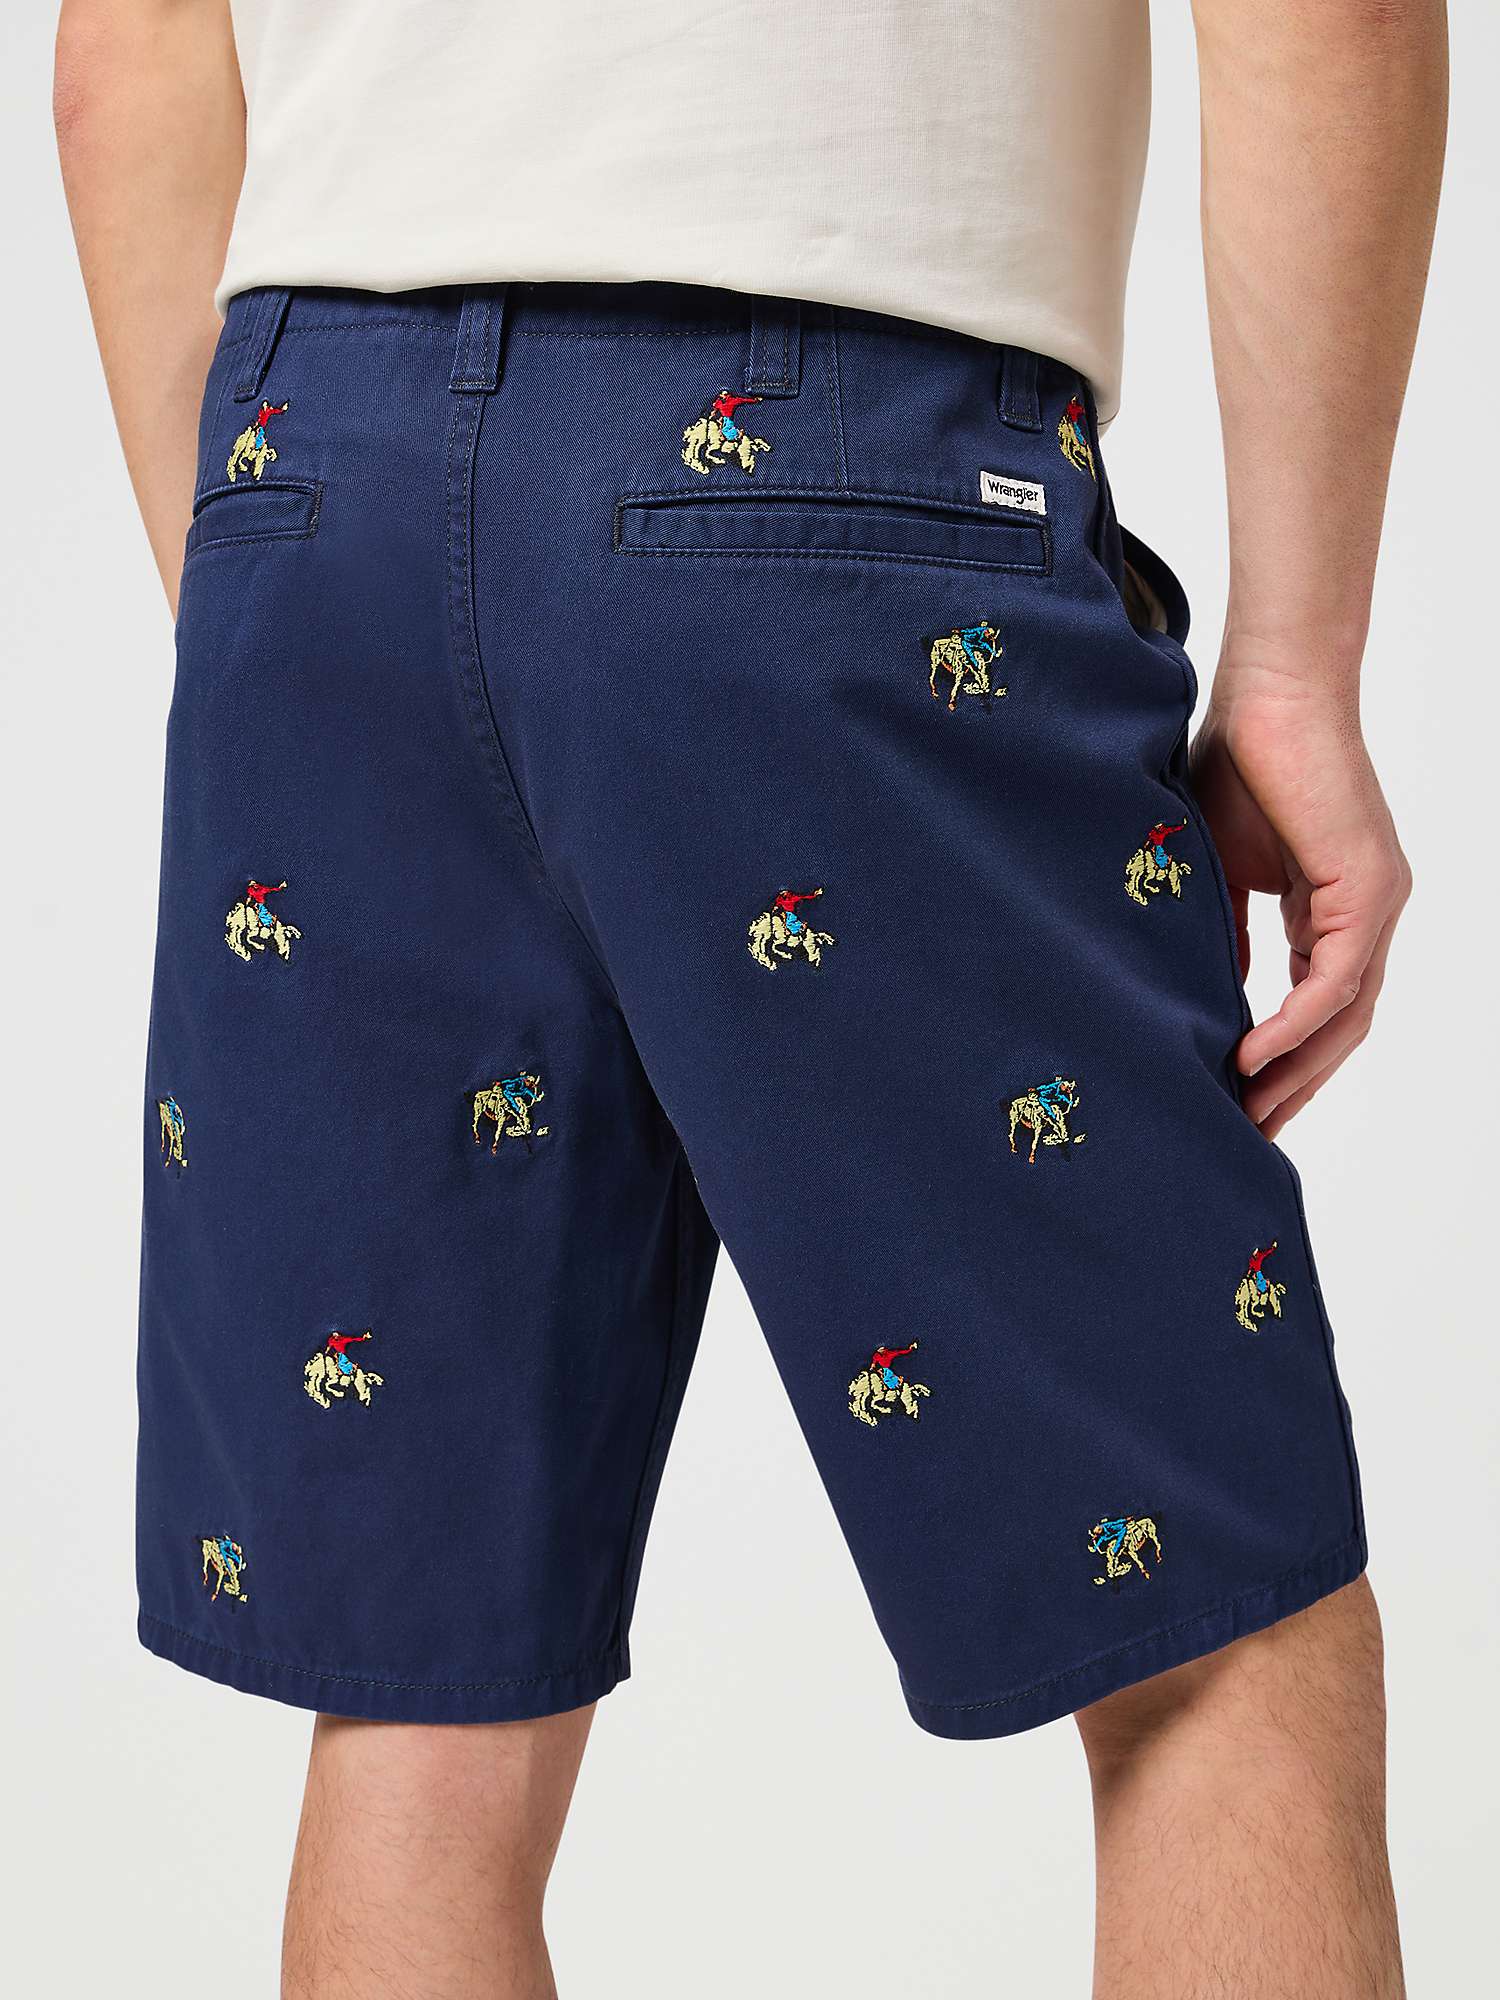 Buy Wrangler Critter Chino Shorts, Dark Navy Online at johnlewis.com